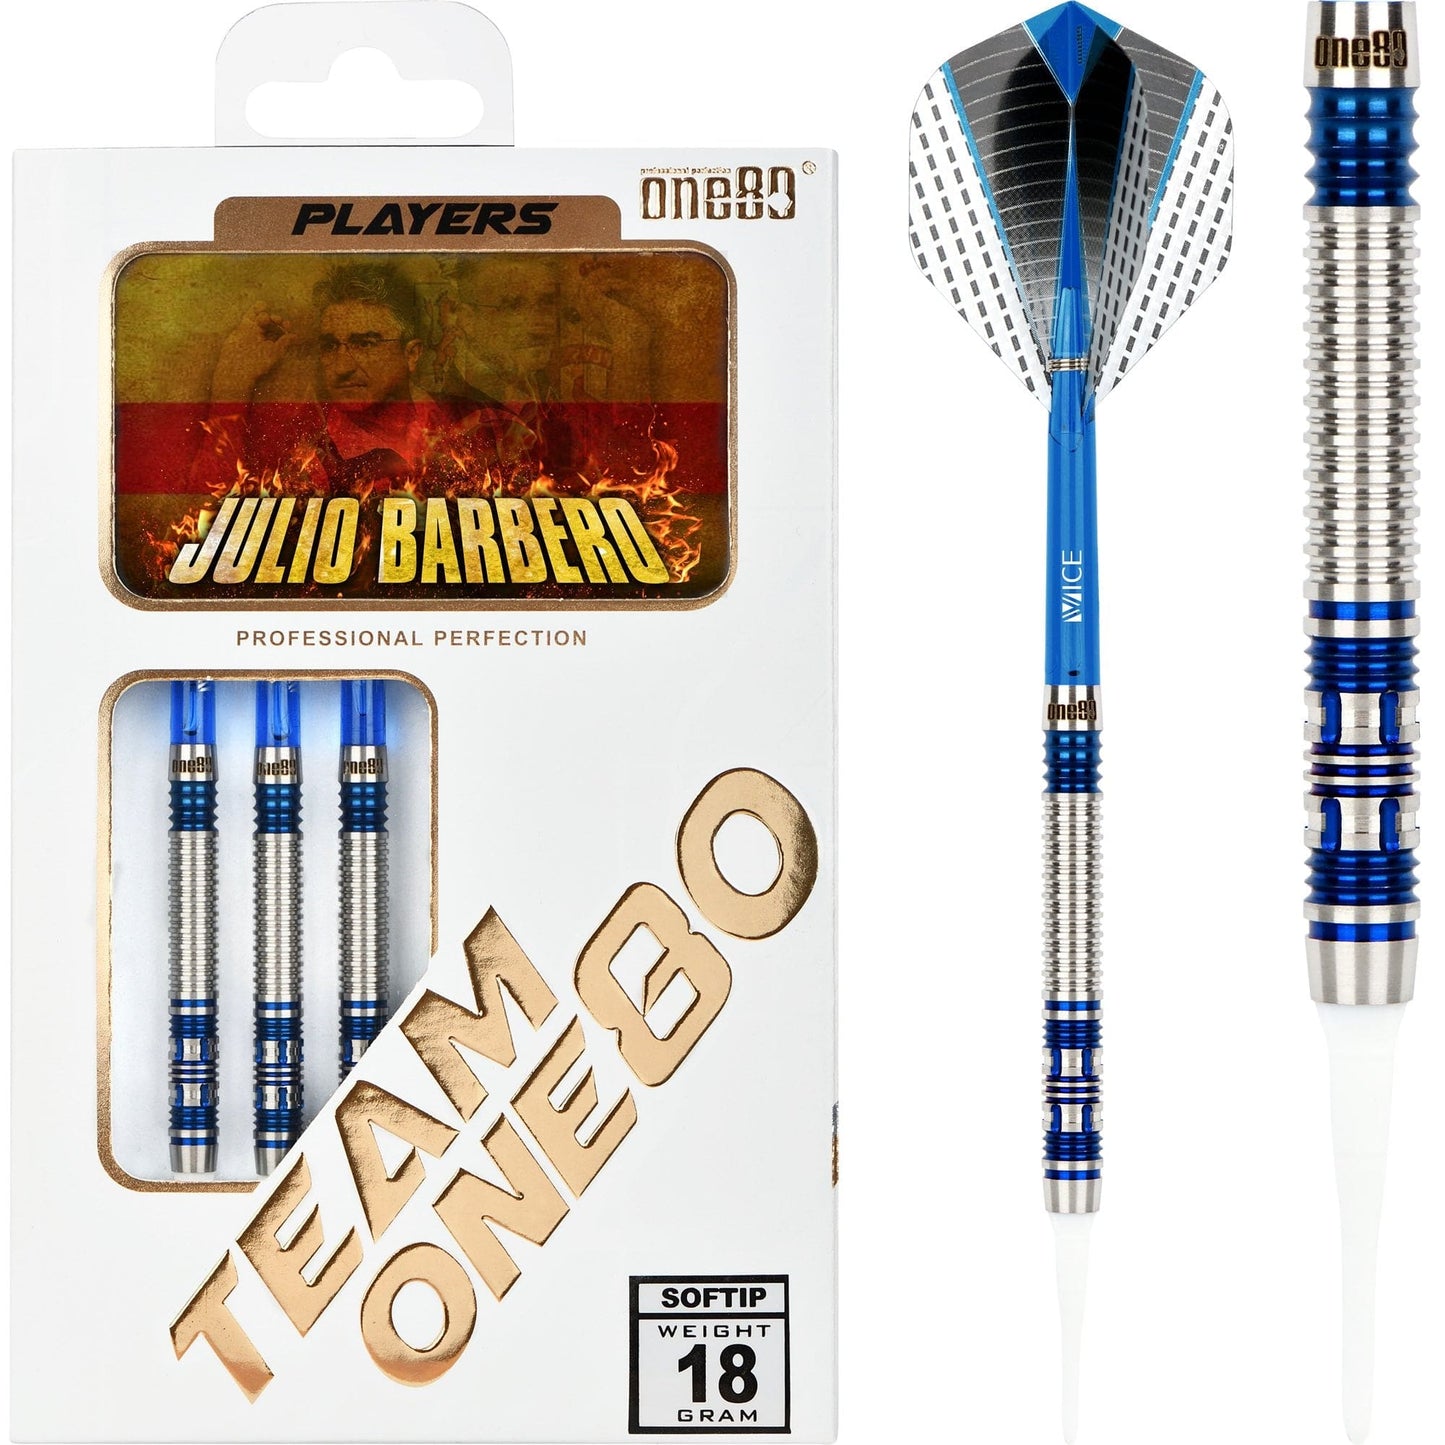 One80 Julio Barbero Darts - Soft Tip 20g